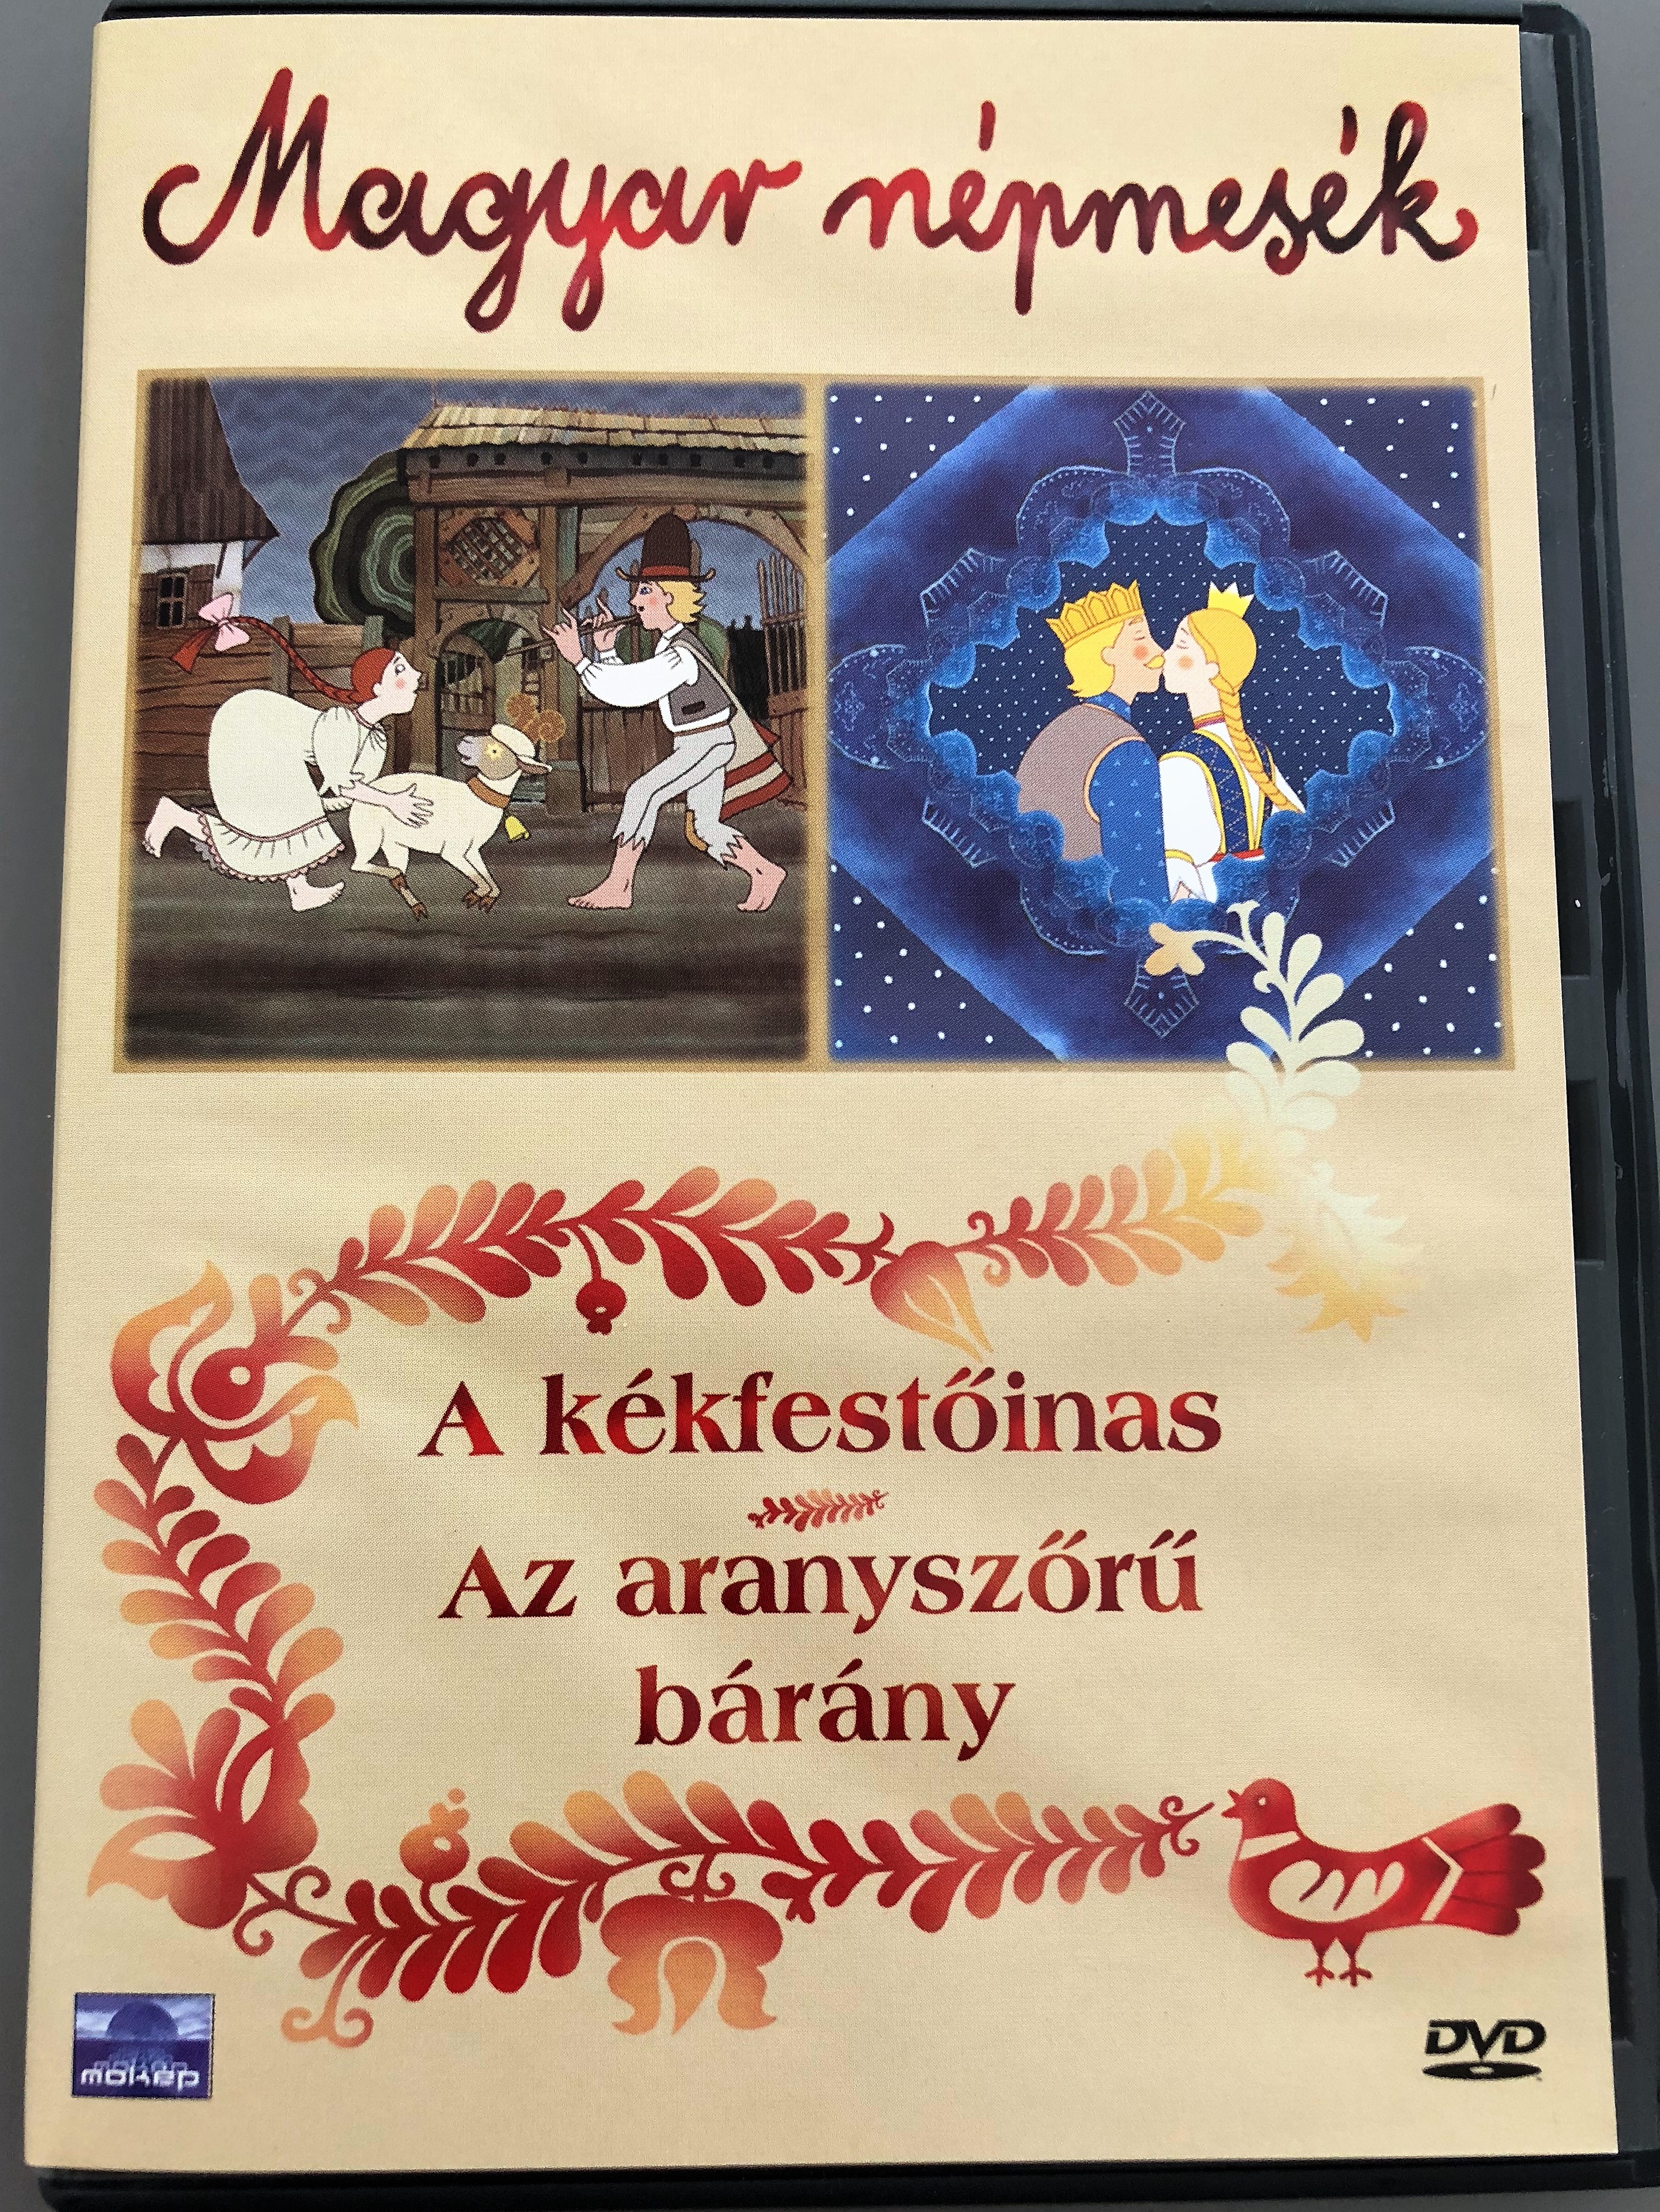 magyar-n-pmes-k-dvd-2002-hungarian-folk-tales-directed-by-horv-th-m-ria-nagy-lajos-a-k-kfest-inas-az-aranysz-r-b-r-ny-14-tale-episodes-on-dvd-storyteller-szab-gyula-music-kal-ka-1-.jpg